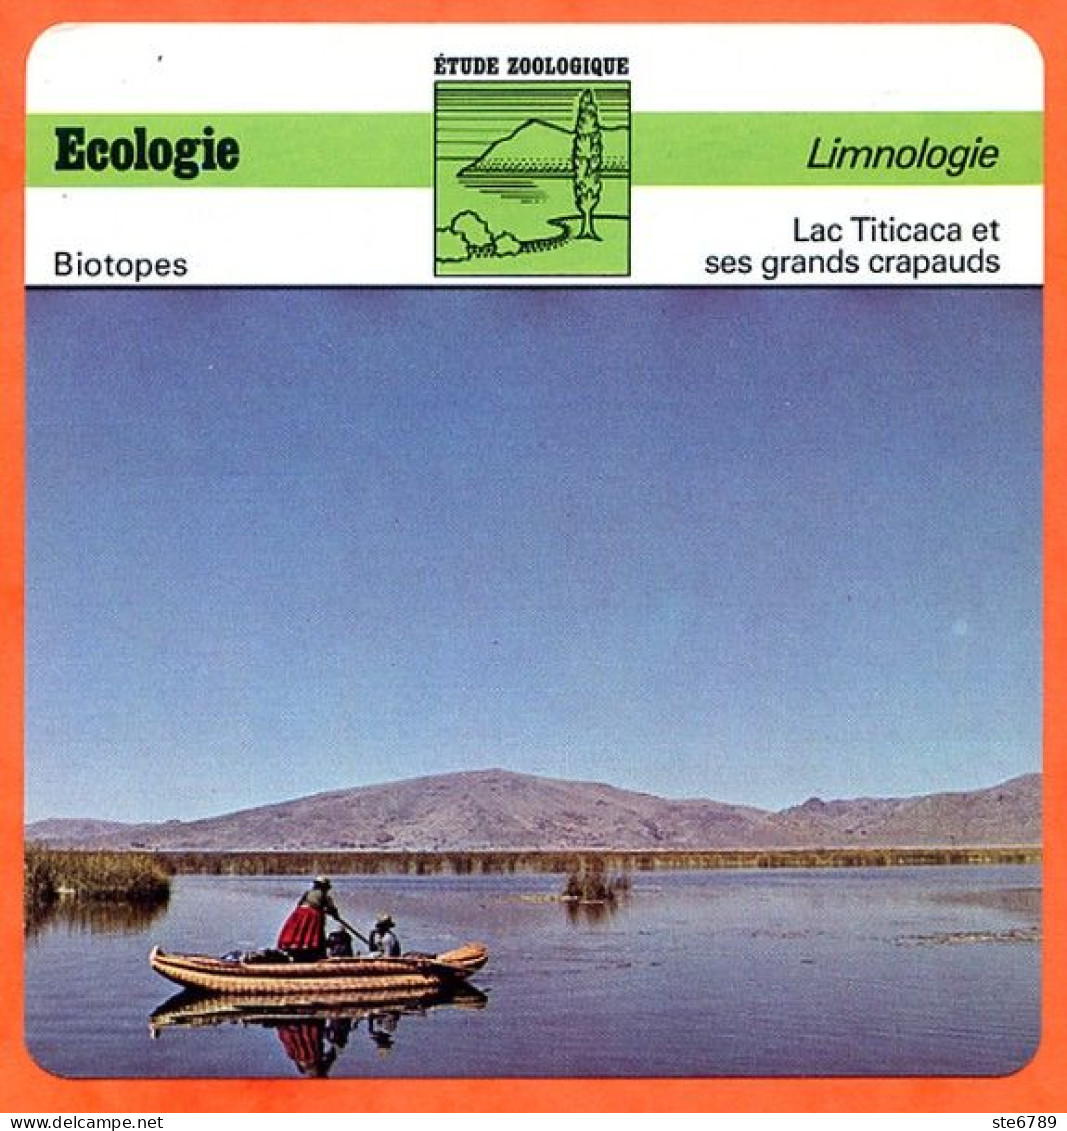 Fiche Ecologie Lac Titicaca Et Ses Grands Crapauds Limnologie Etude Zoologique Biotopes - Aardrijkskunde